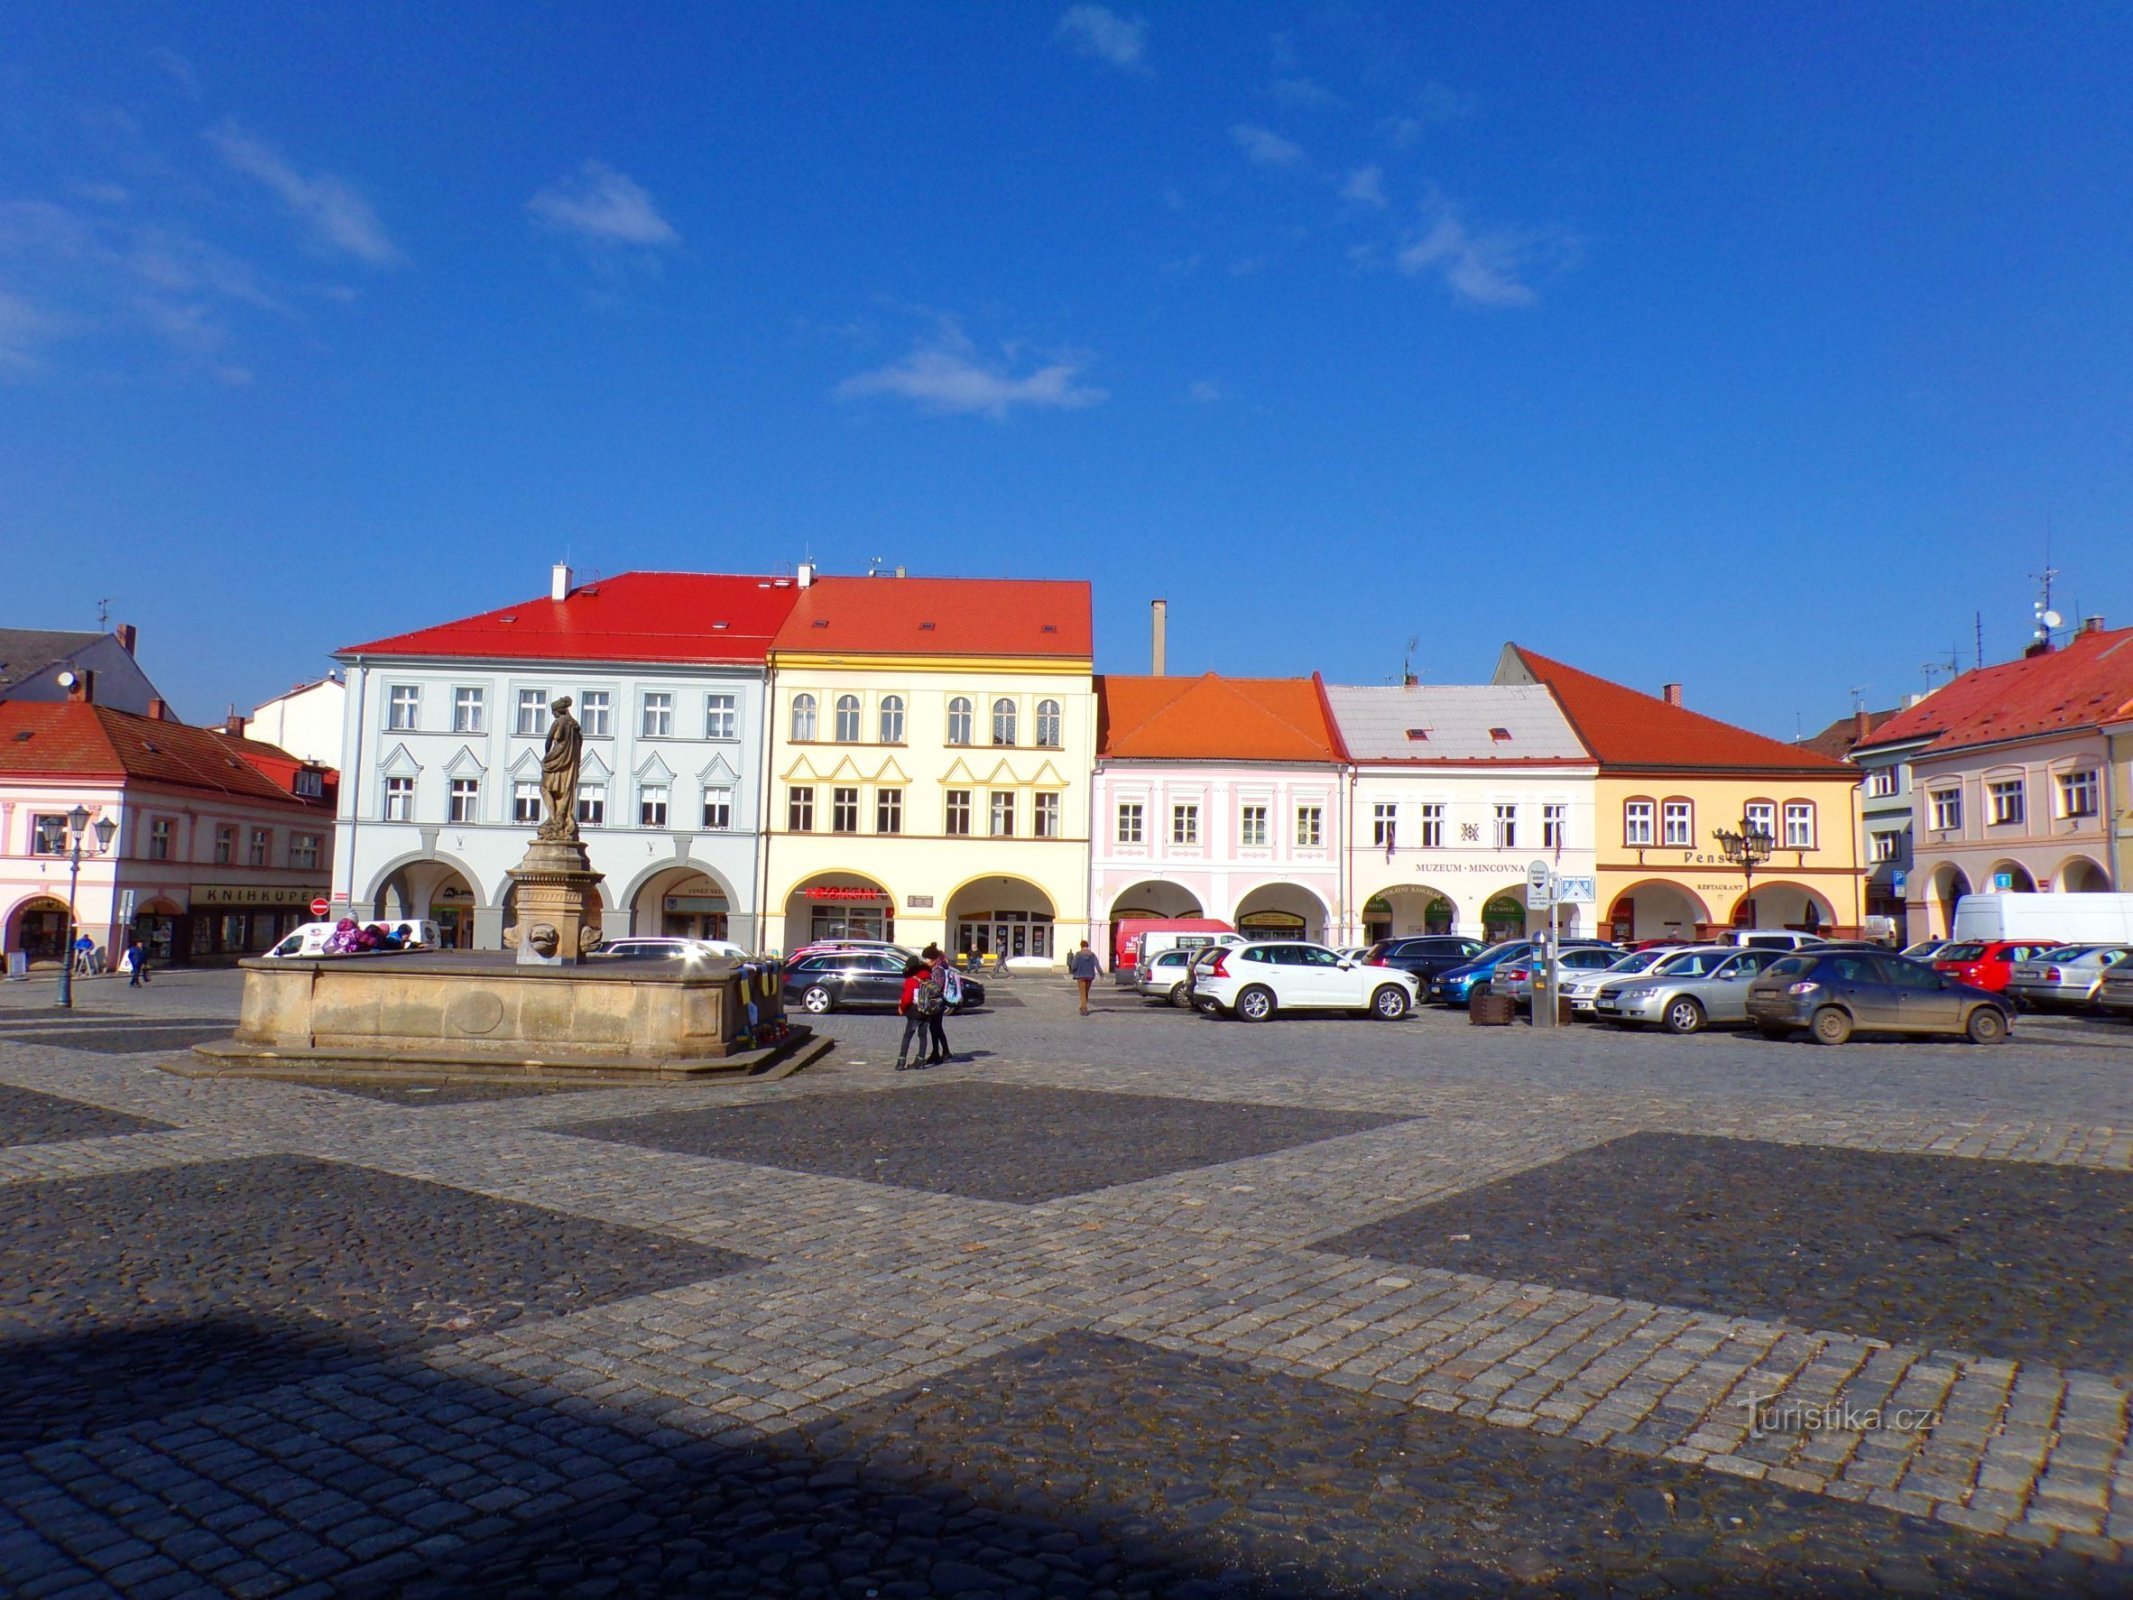 Palackého nr. 73 til Valdštejnovo náměstí nr. 77 (Jičín, 3.3.2022/XNUMX/XNUMX)